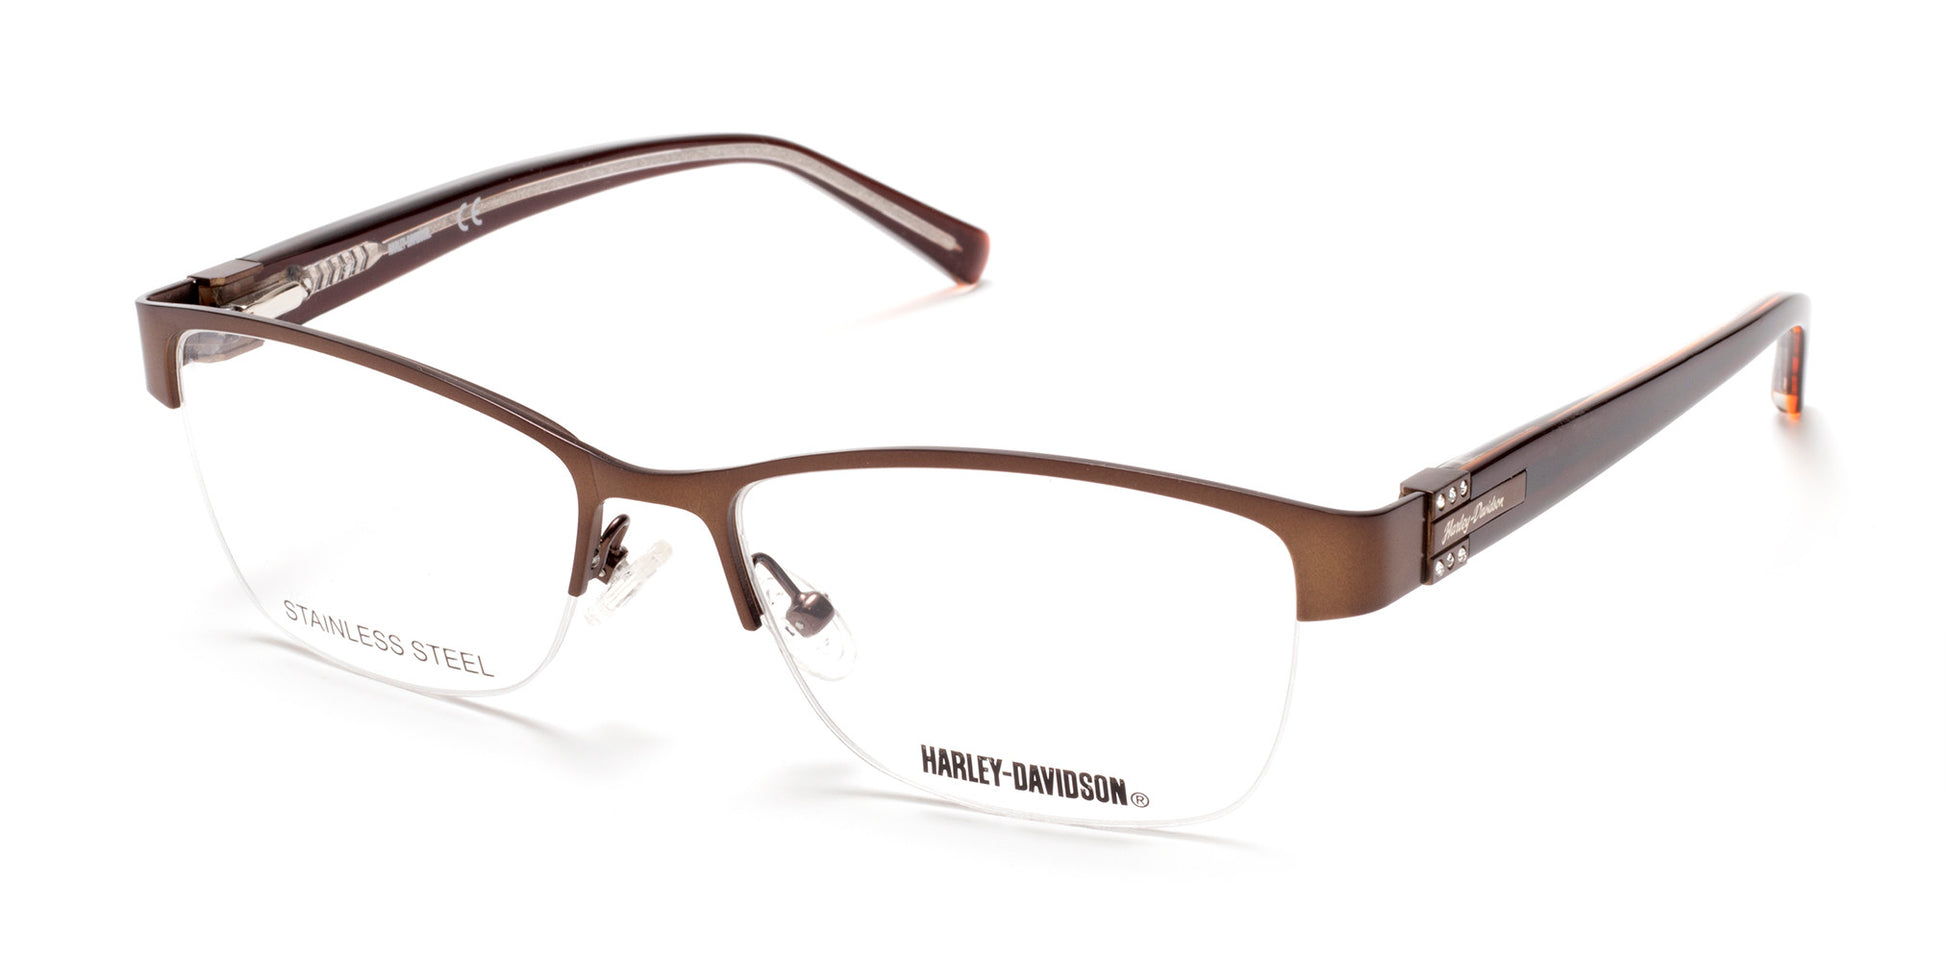 Harley-Davidson HD0545 Butterfly Eyeglasses 046-046 - Matte Light Brown